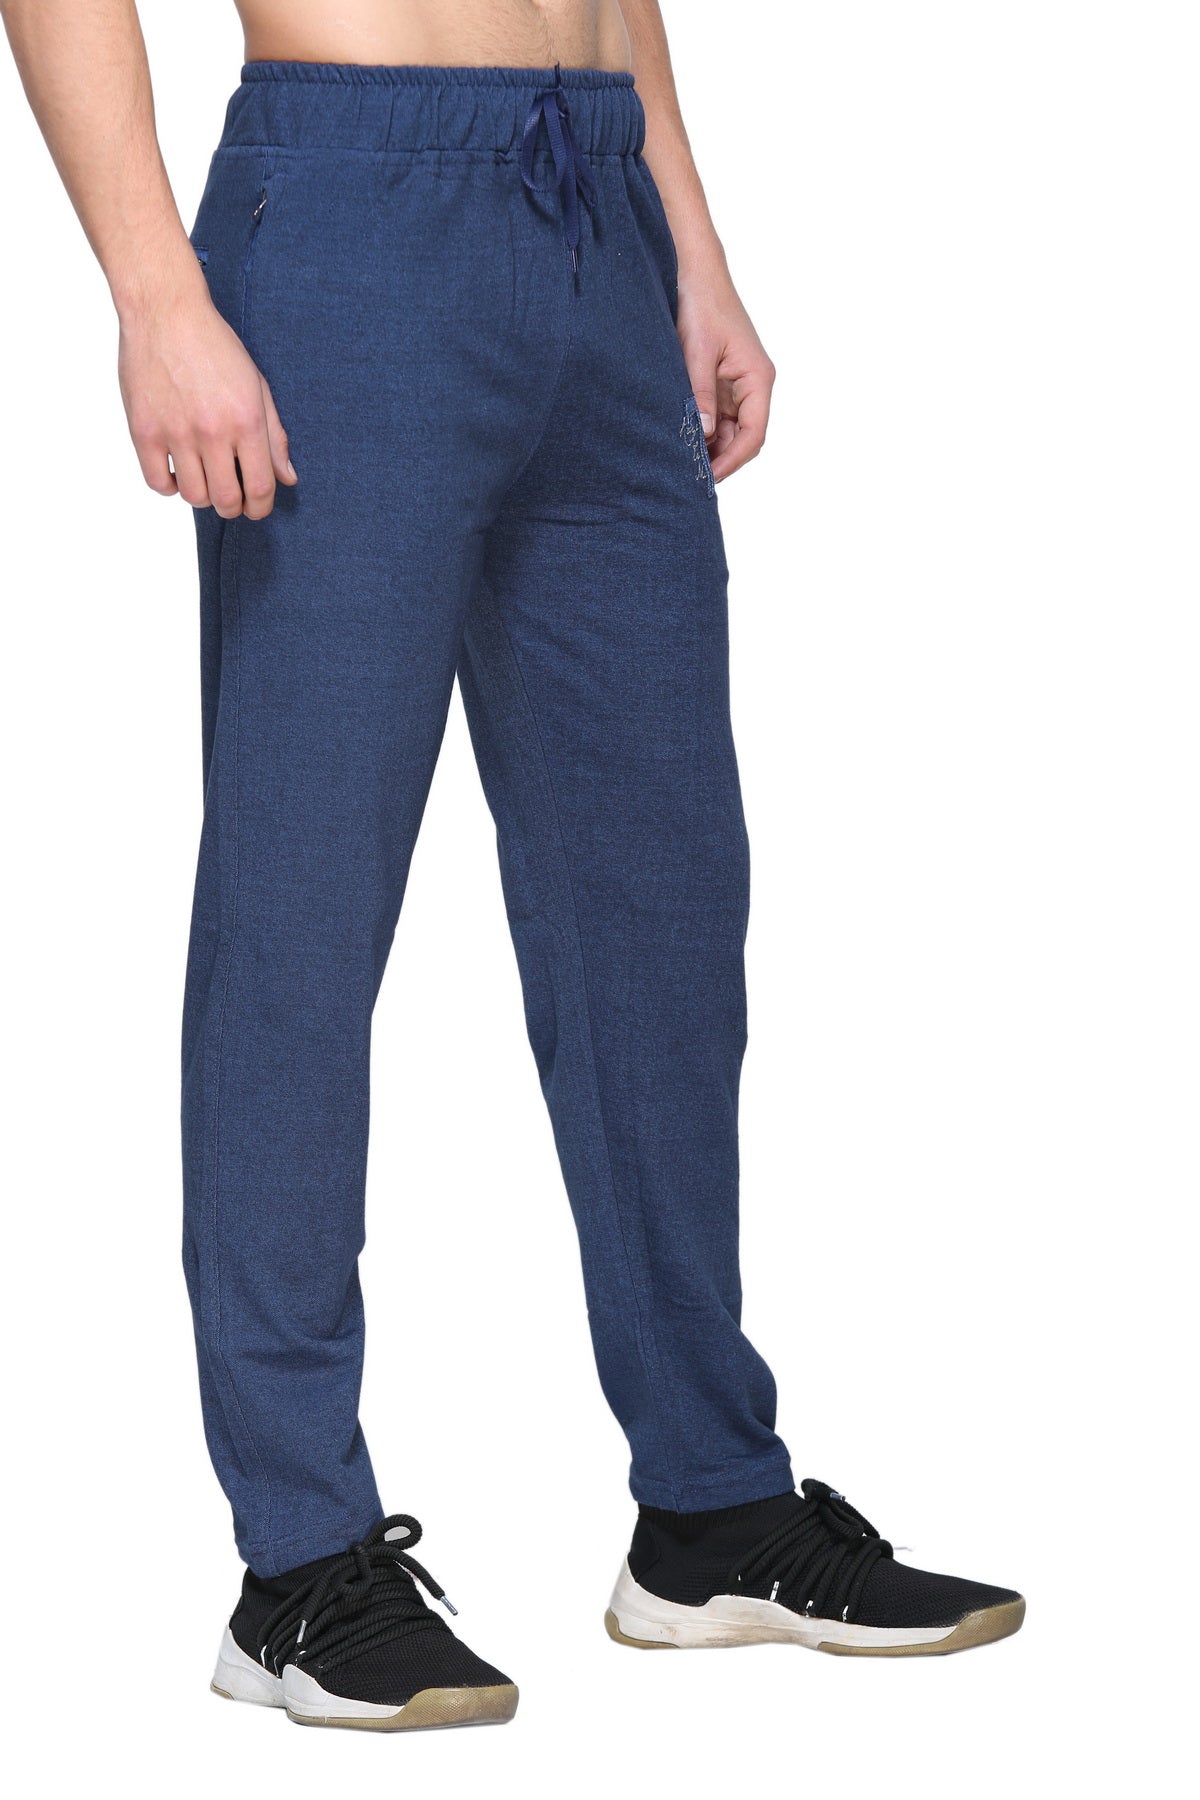 Dark Blue Solid Men Denim Regular Fit RFD Lower, Size: Medium at Rs  435/piece in New Delhi